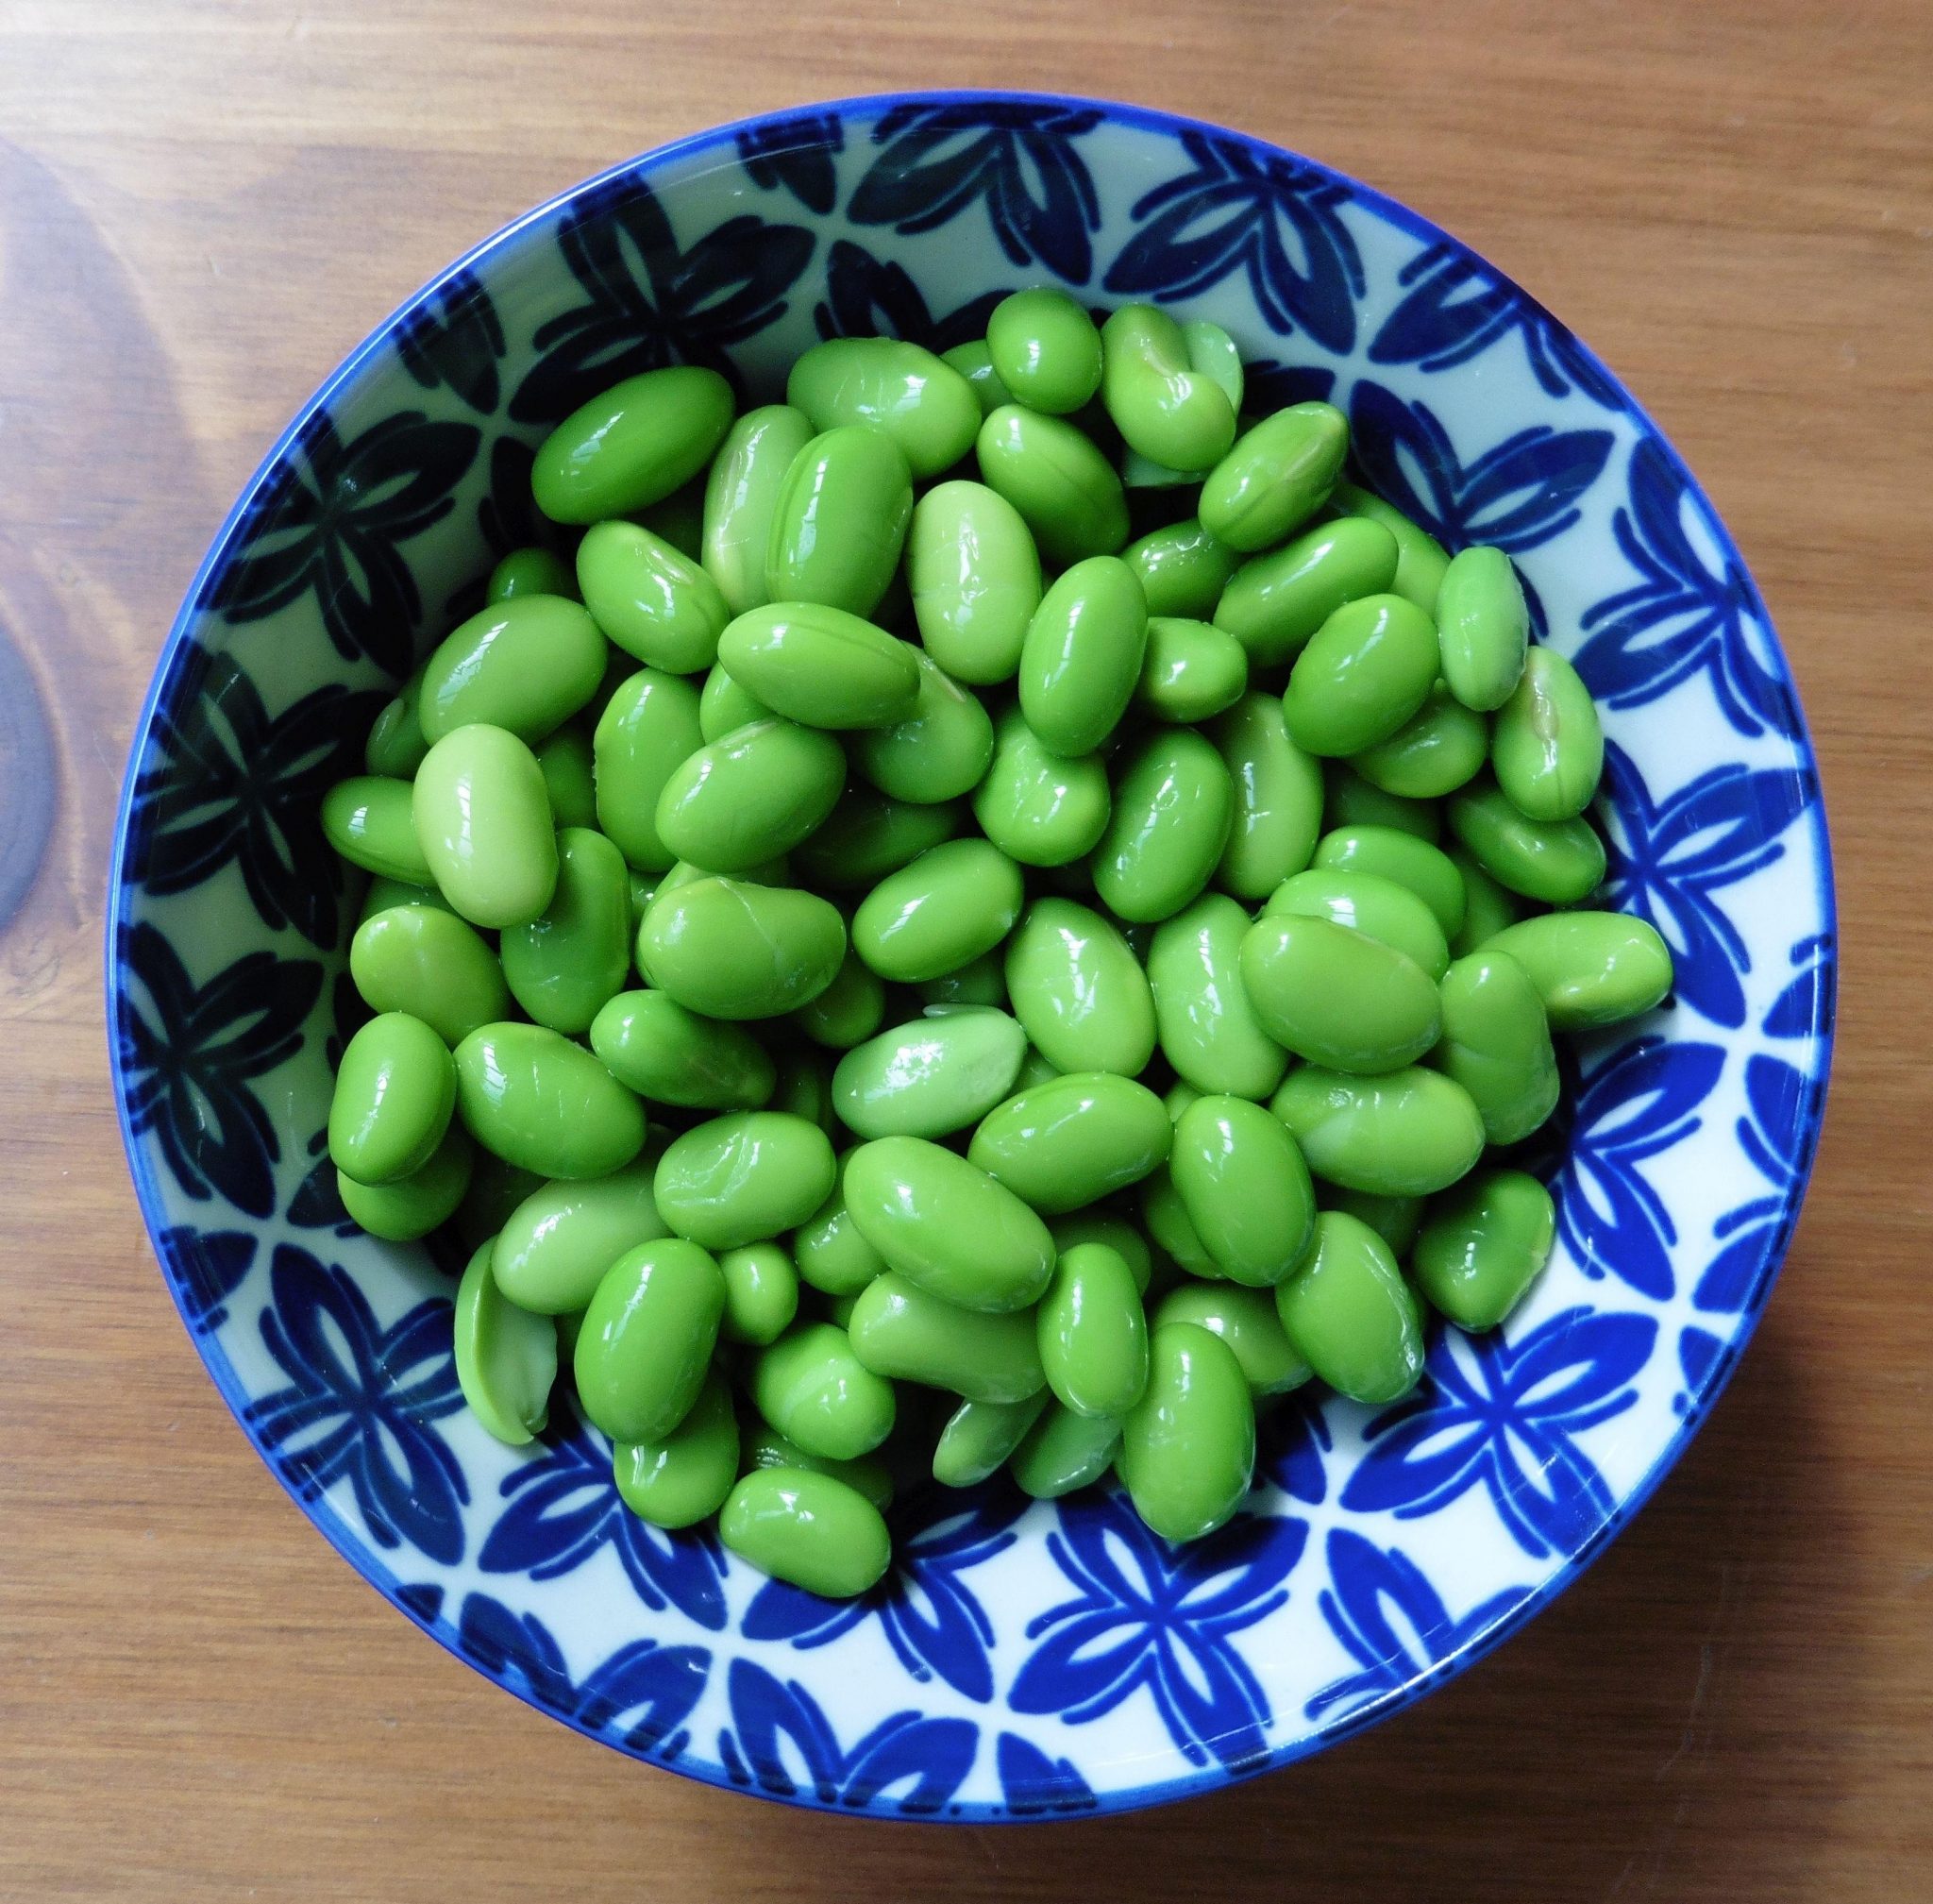 How to grow Edamame Beans